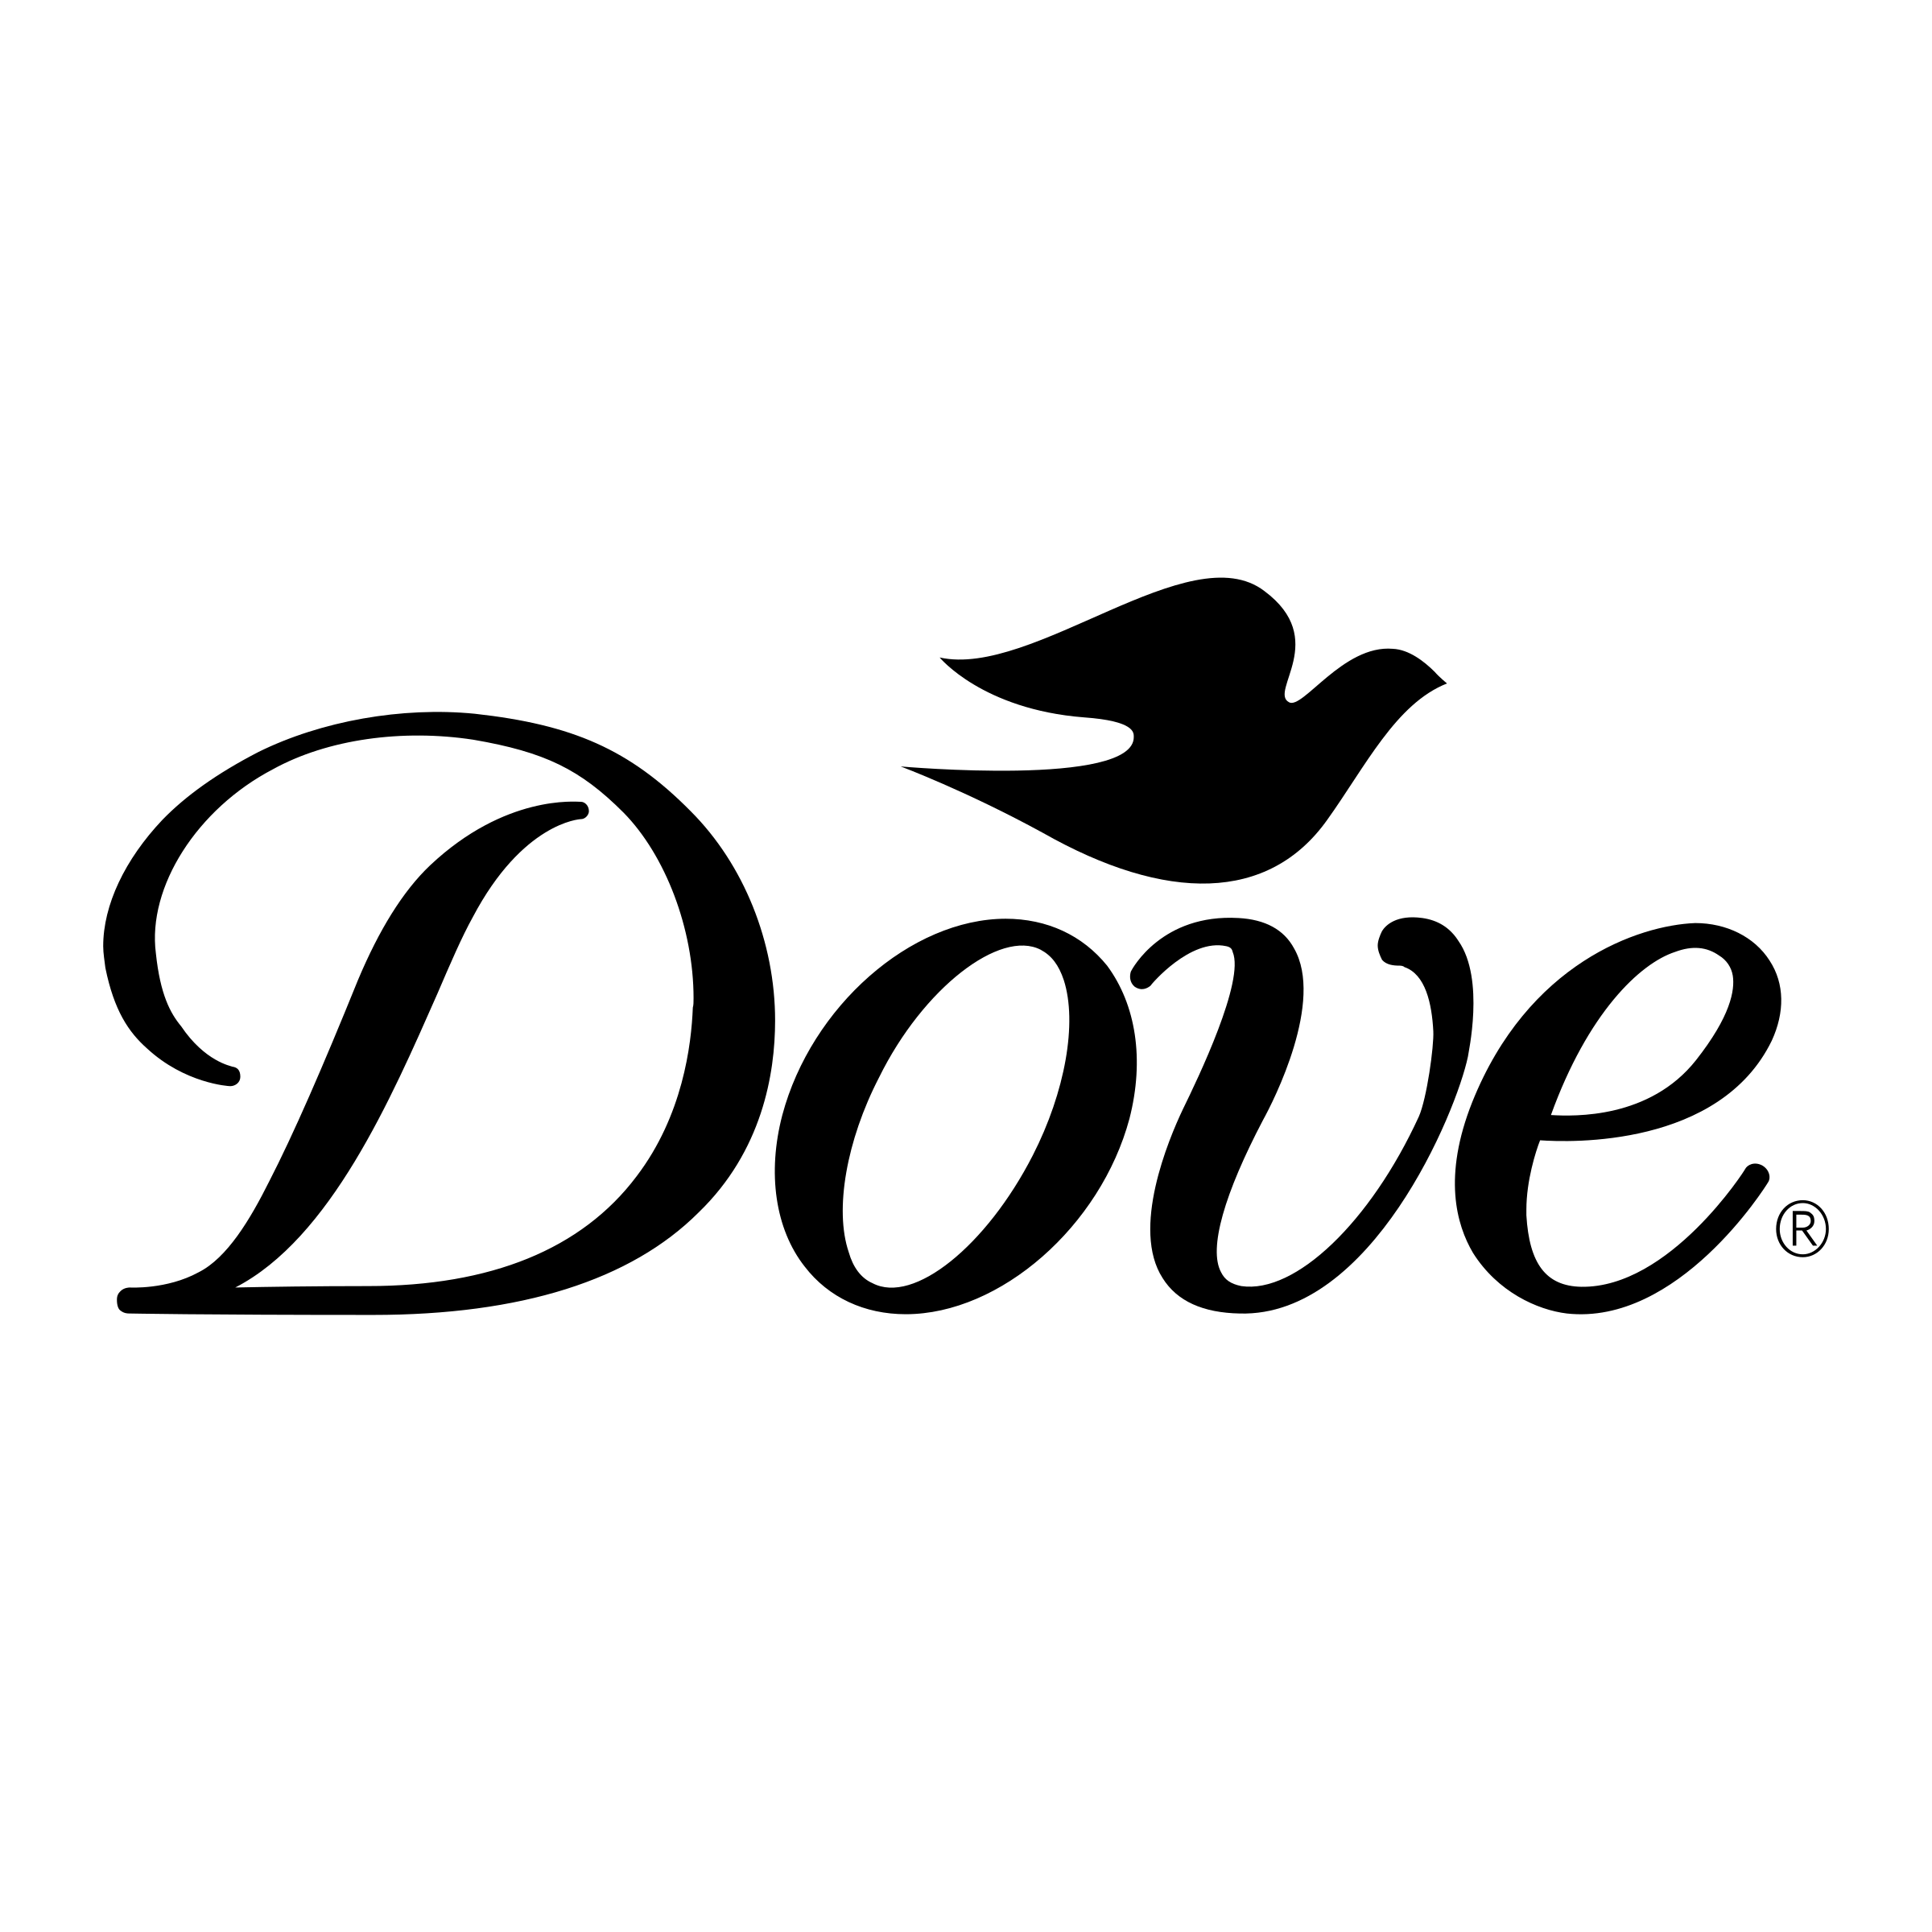 Black and White Dove Logo - Dove Logo PNG Transparent & SVG Vector - Freebie Supply